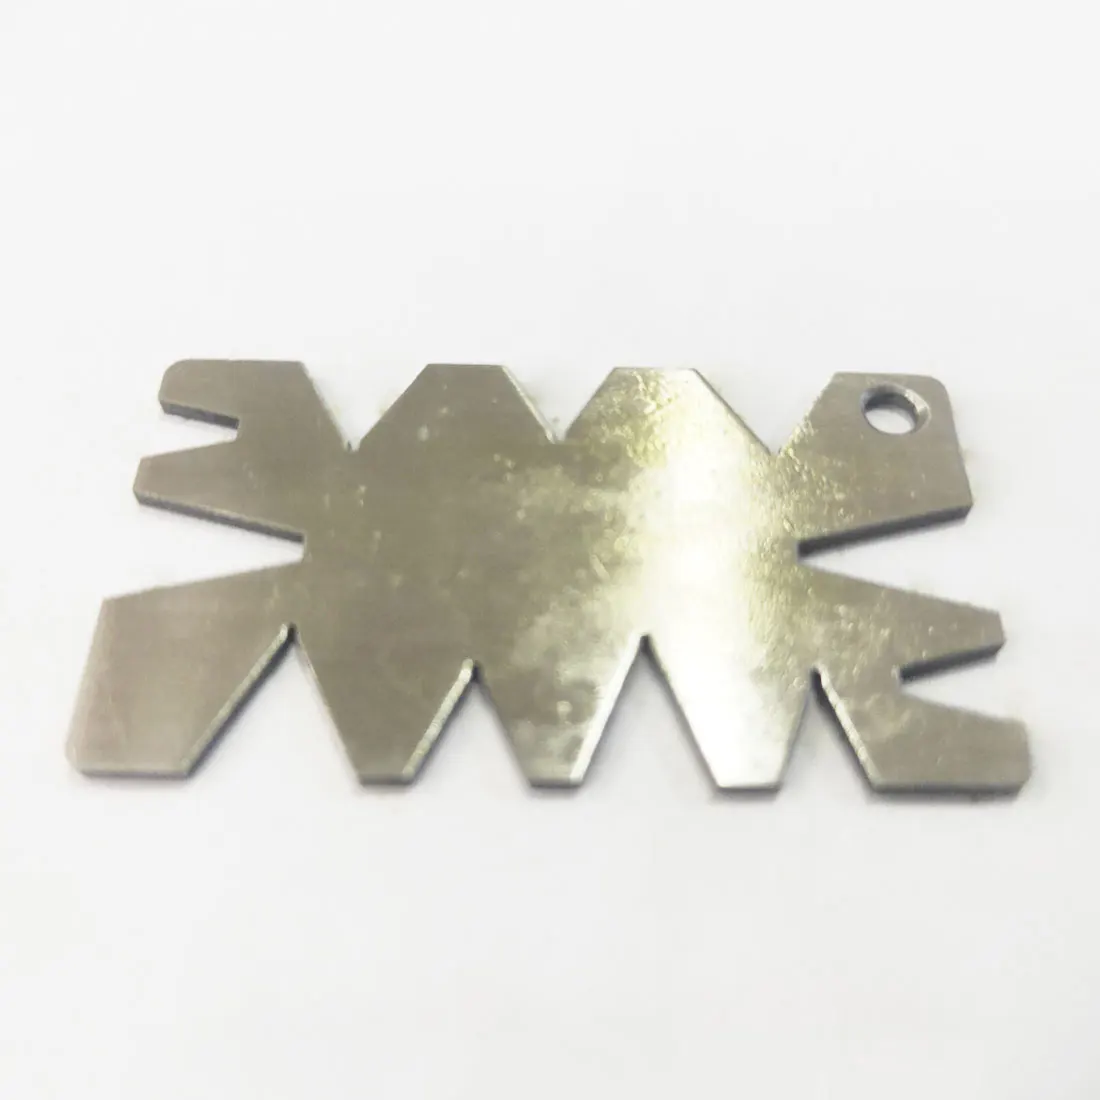 

Grinding Gage Stainless Steel Screw Thread Cutting Angle Gauge Metalworking Screw Gauge Measuring Tool 5.8 x 3.2cm